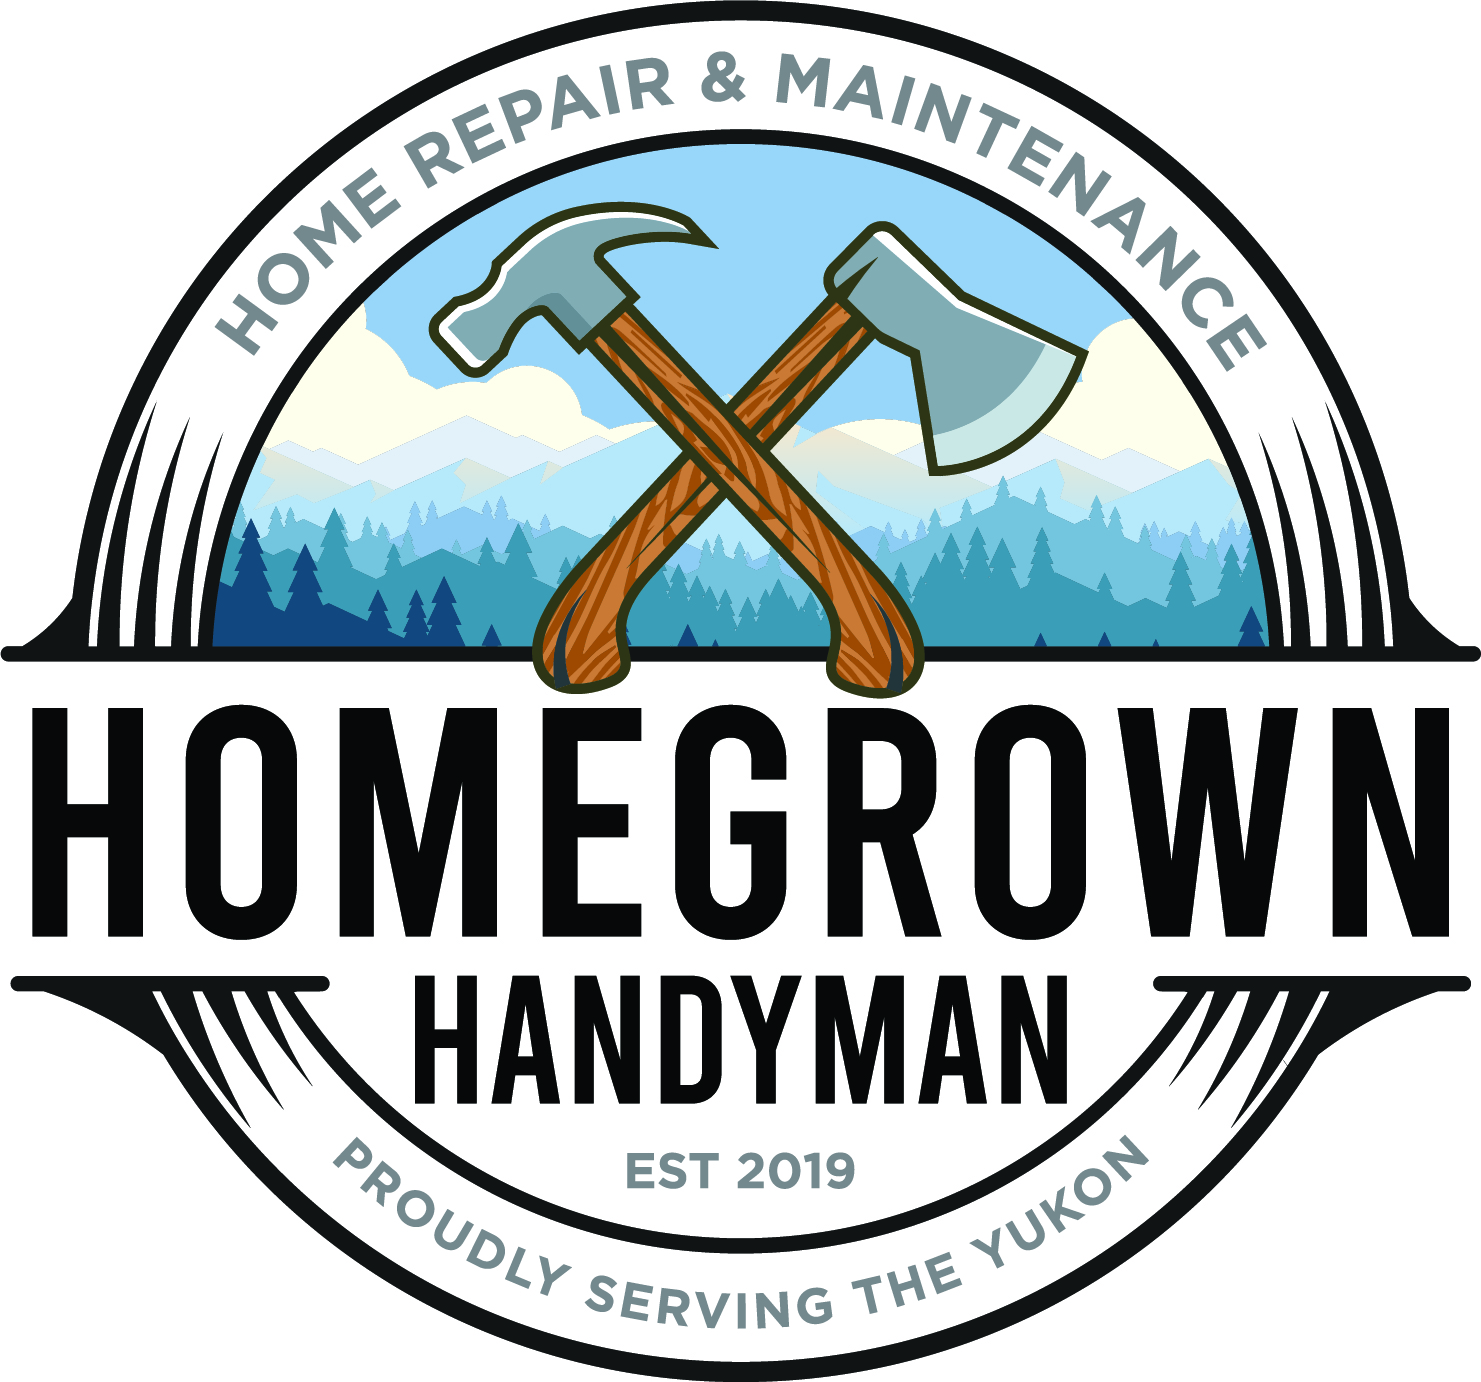 Homegrown Handyman